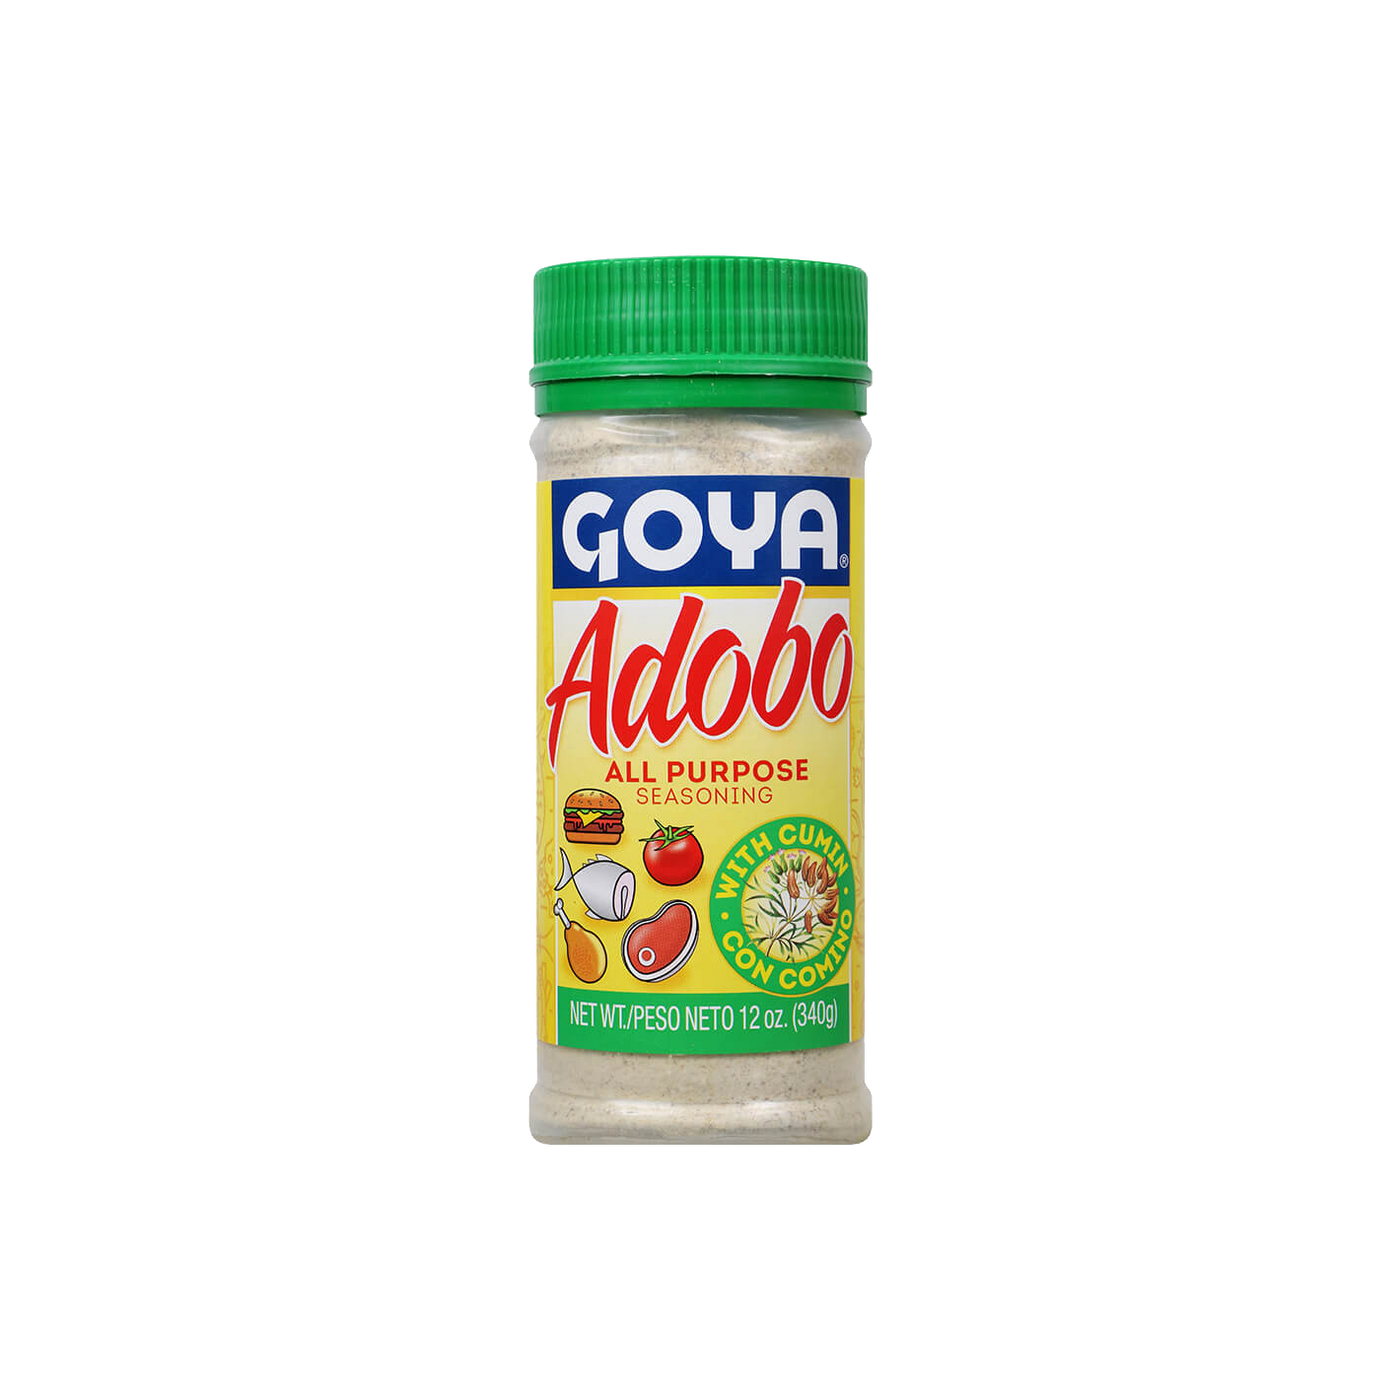   Goya Adobo Seasoning With Cumin